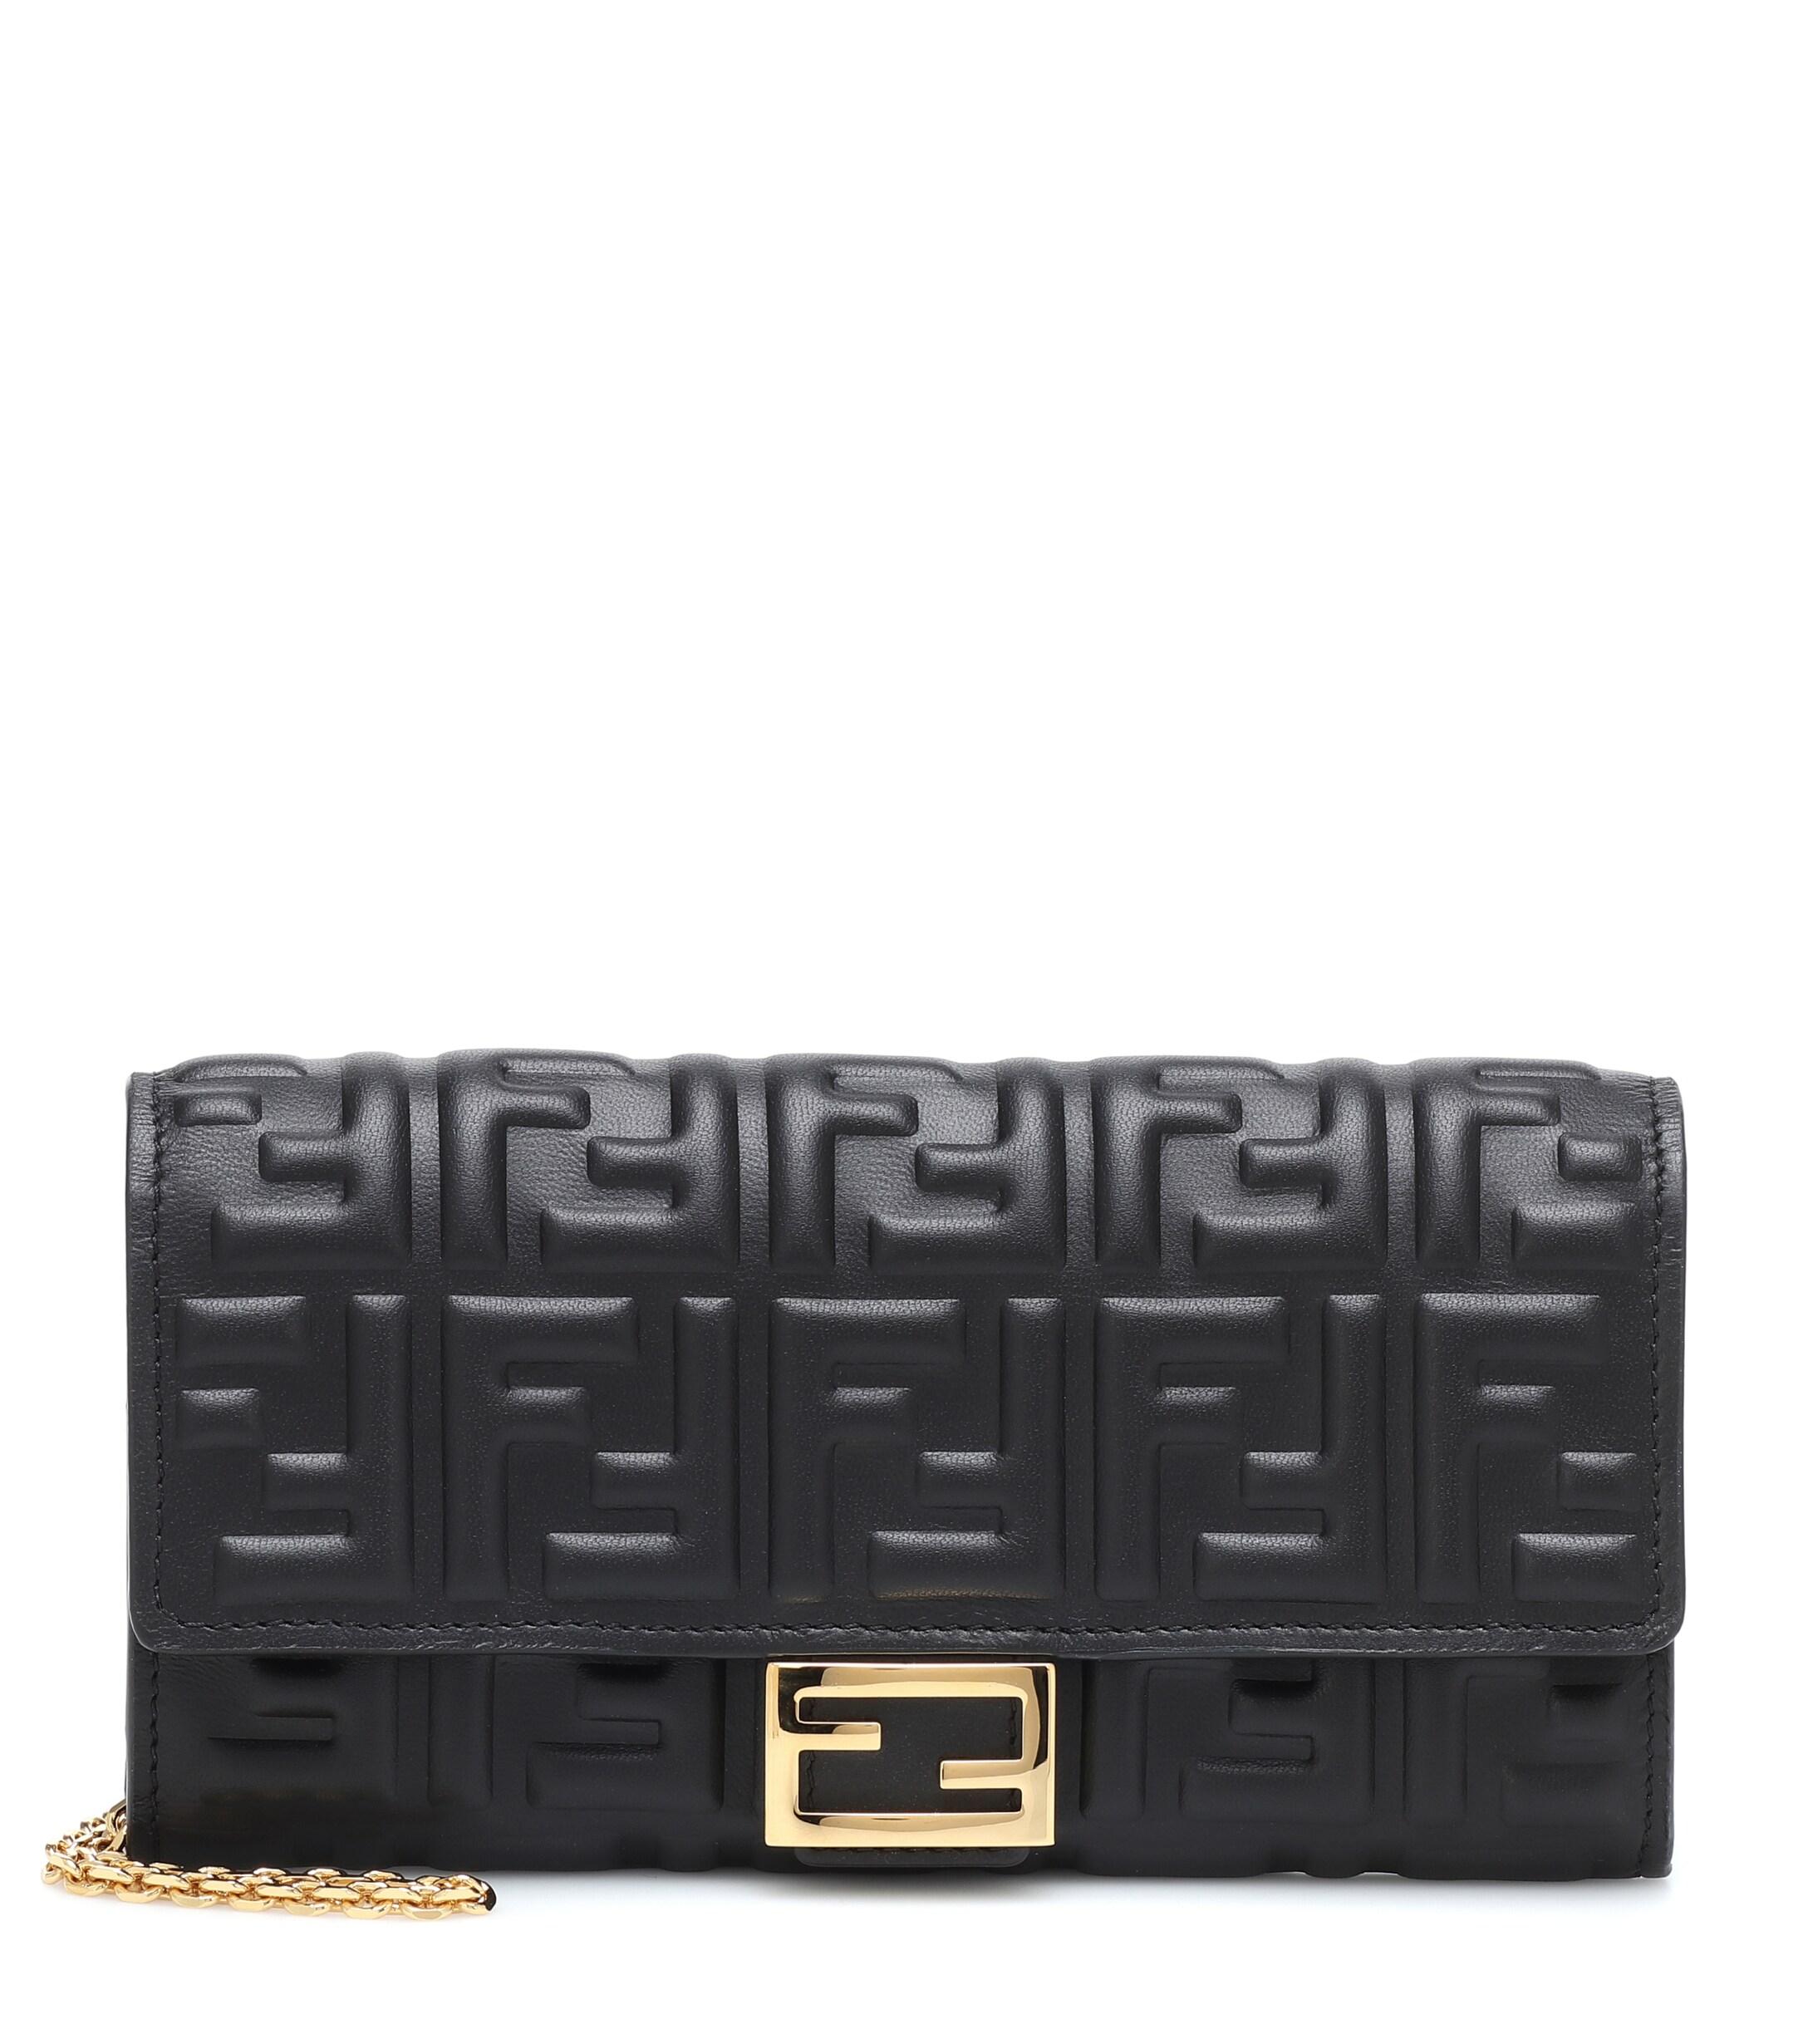 Fendi Baguette Continental Leather Wallet in Black | Lyst